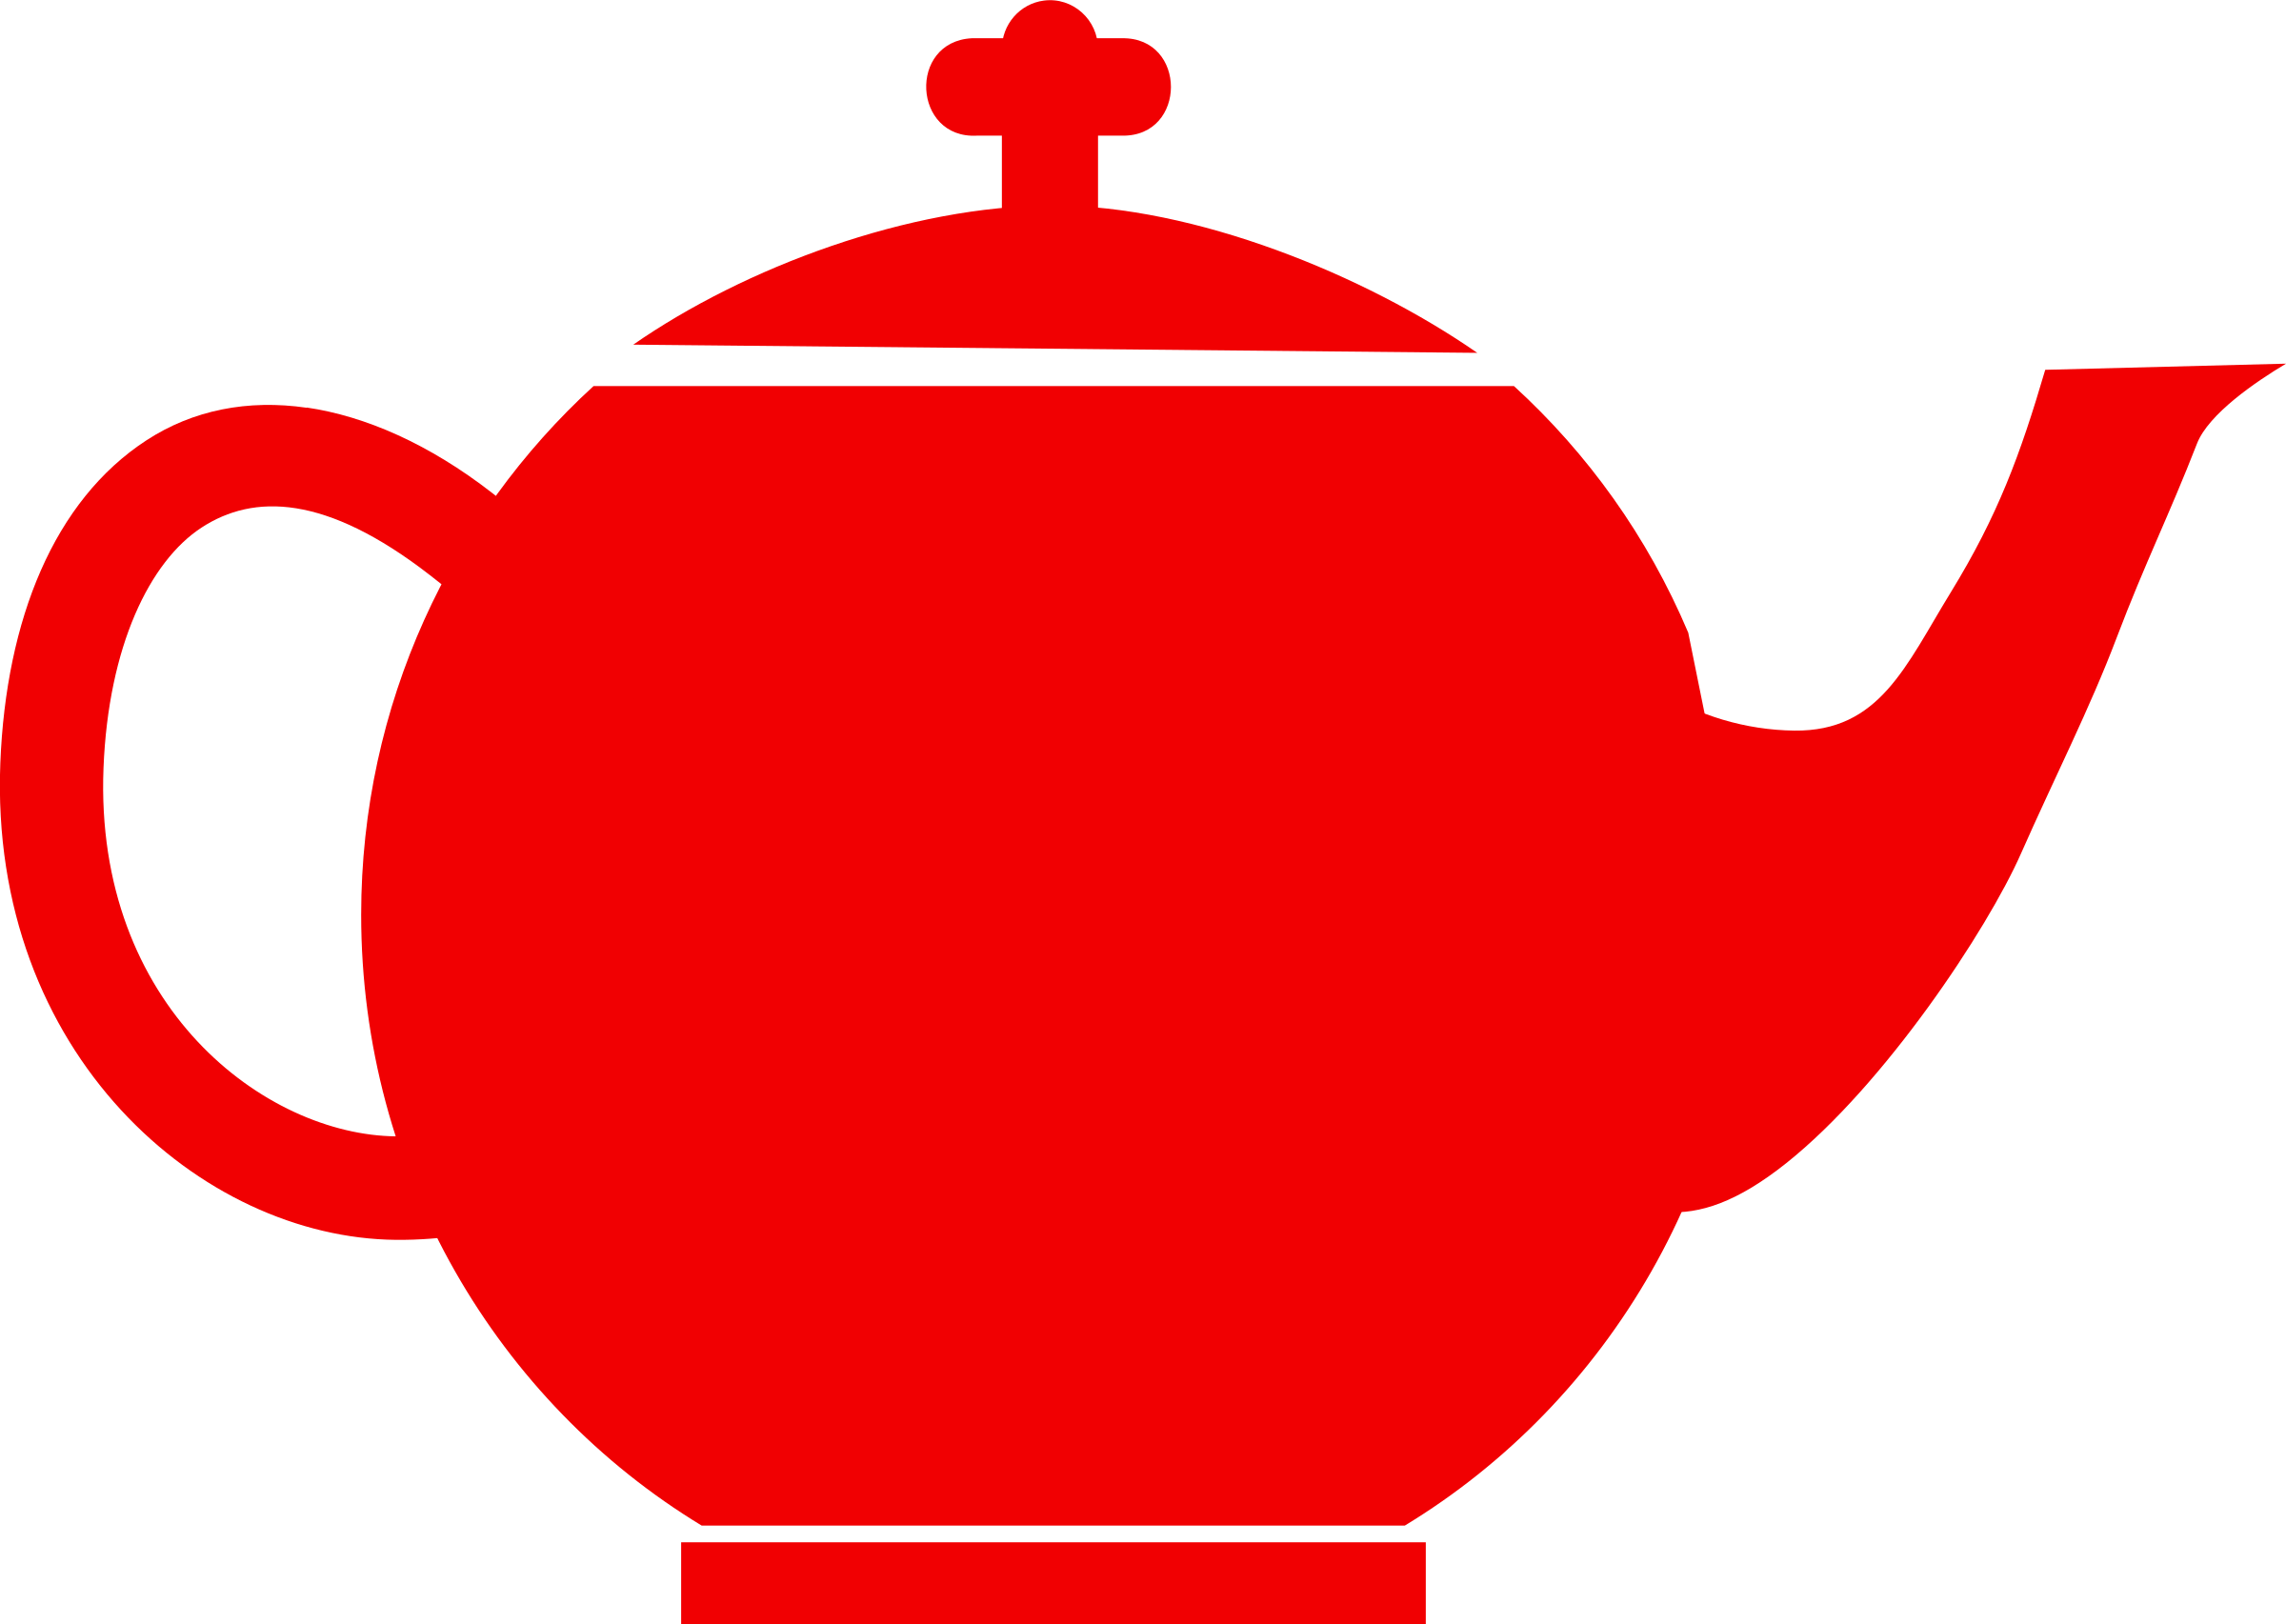 Clipart - Jubilee tea pot red